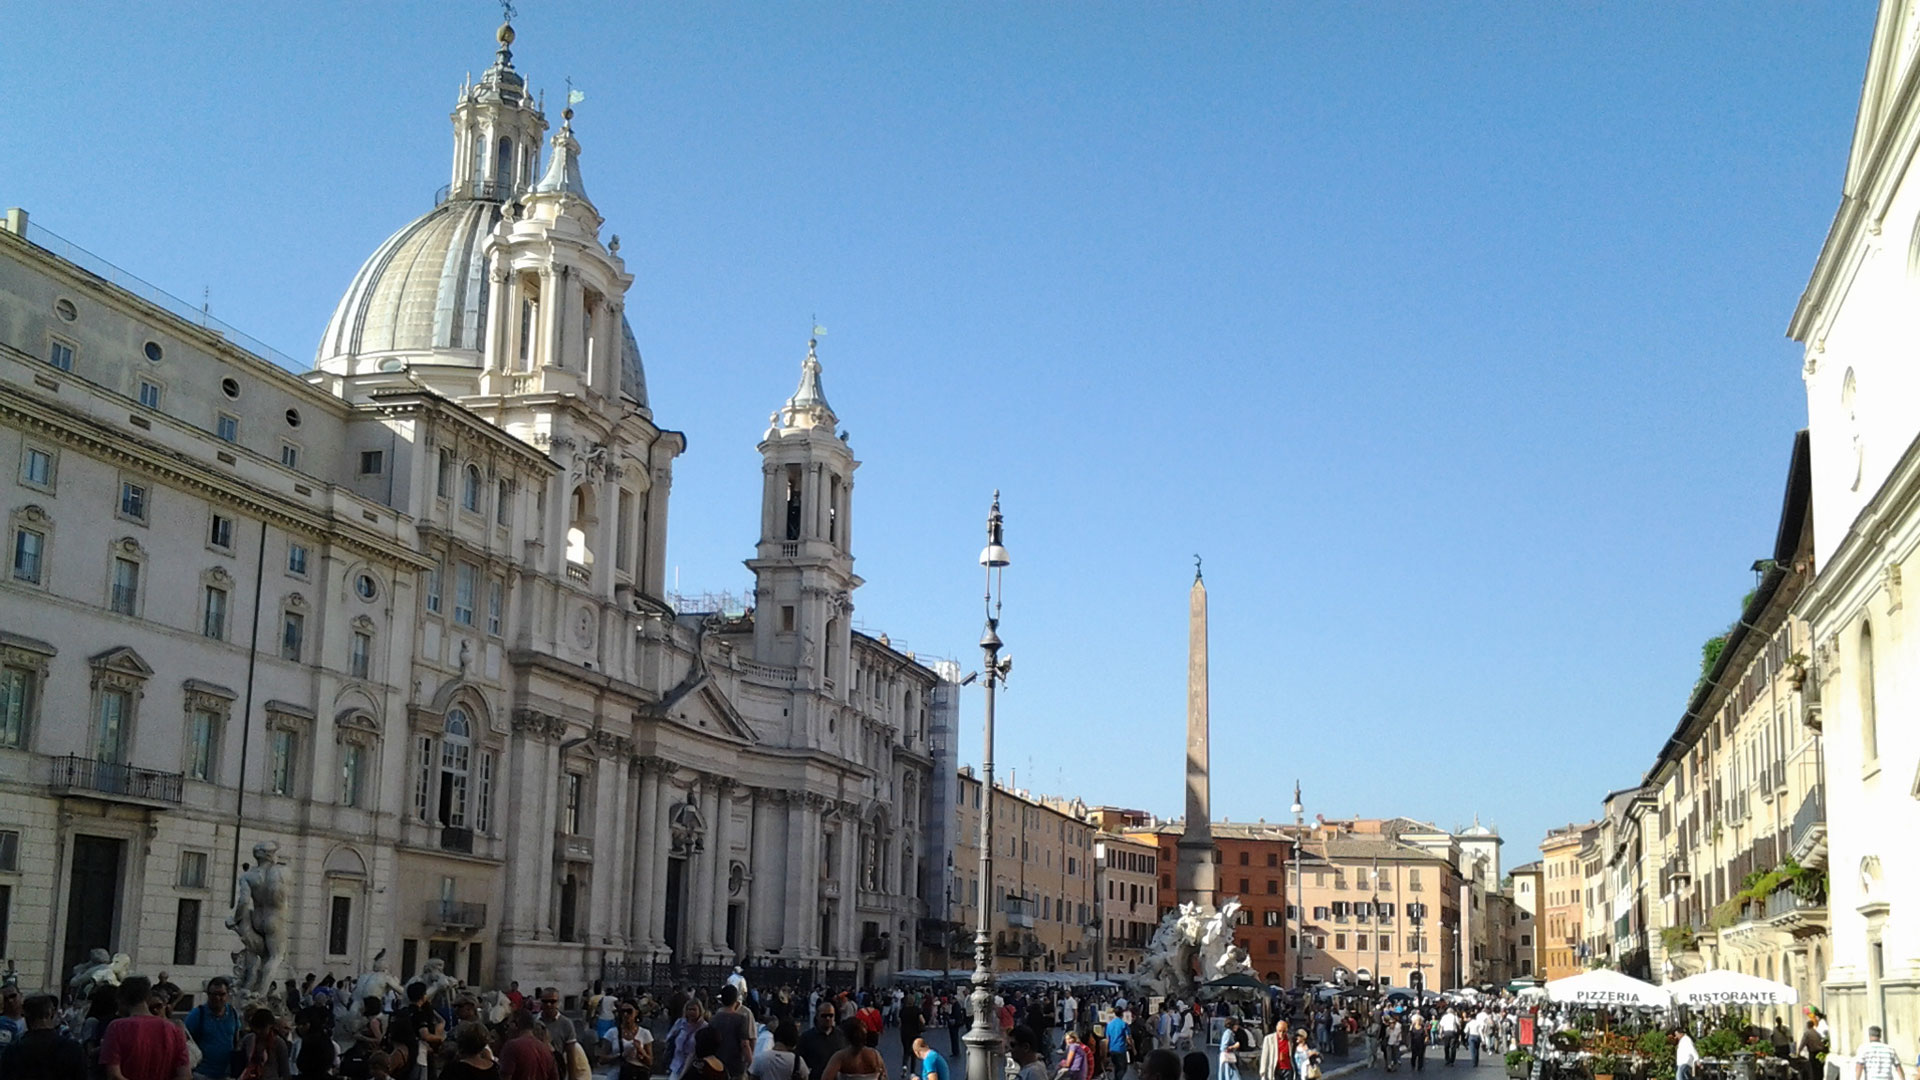 Rome Piazza Navona